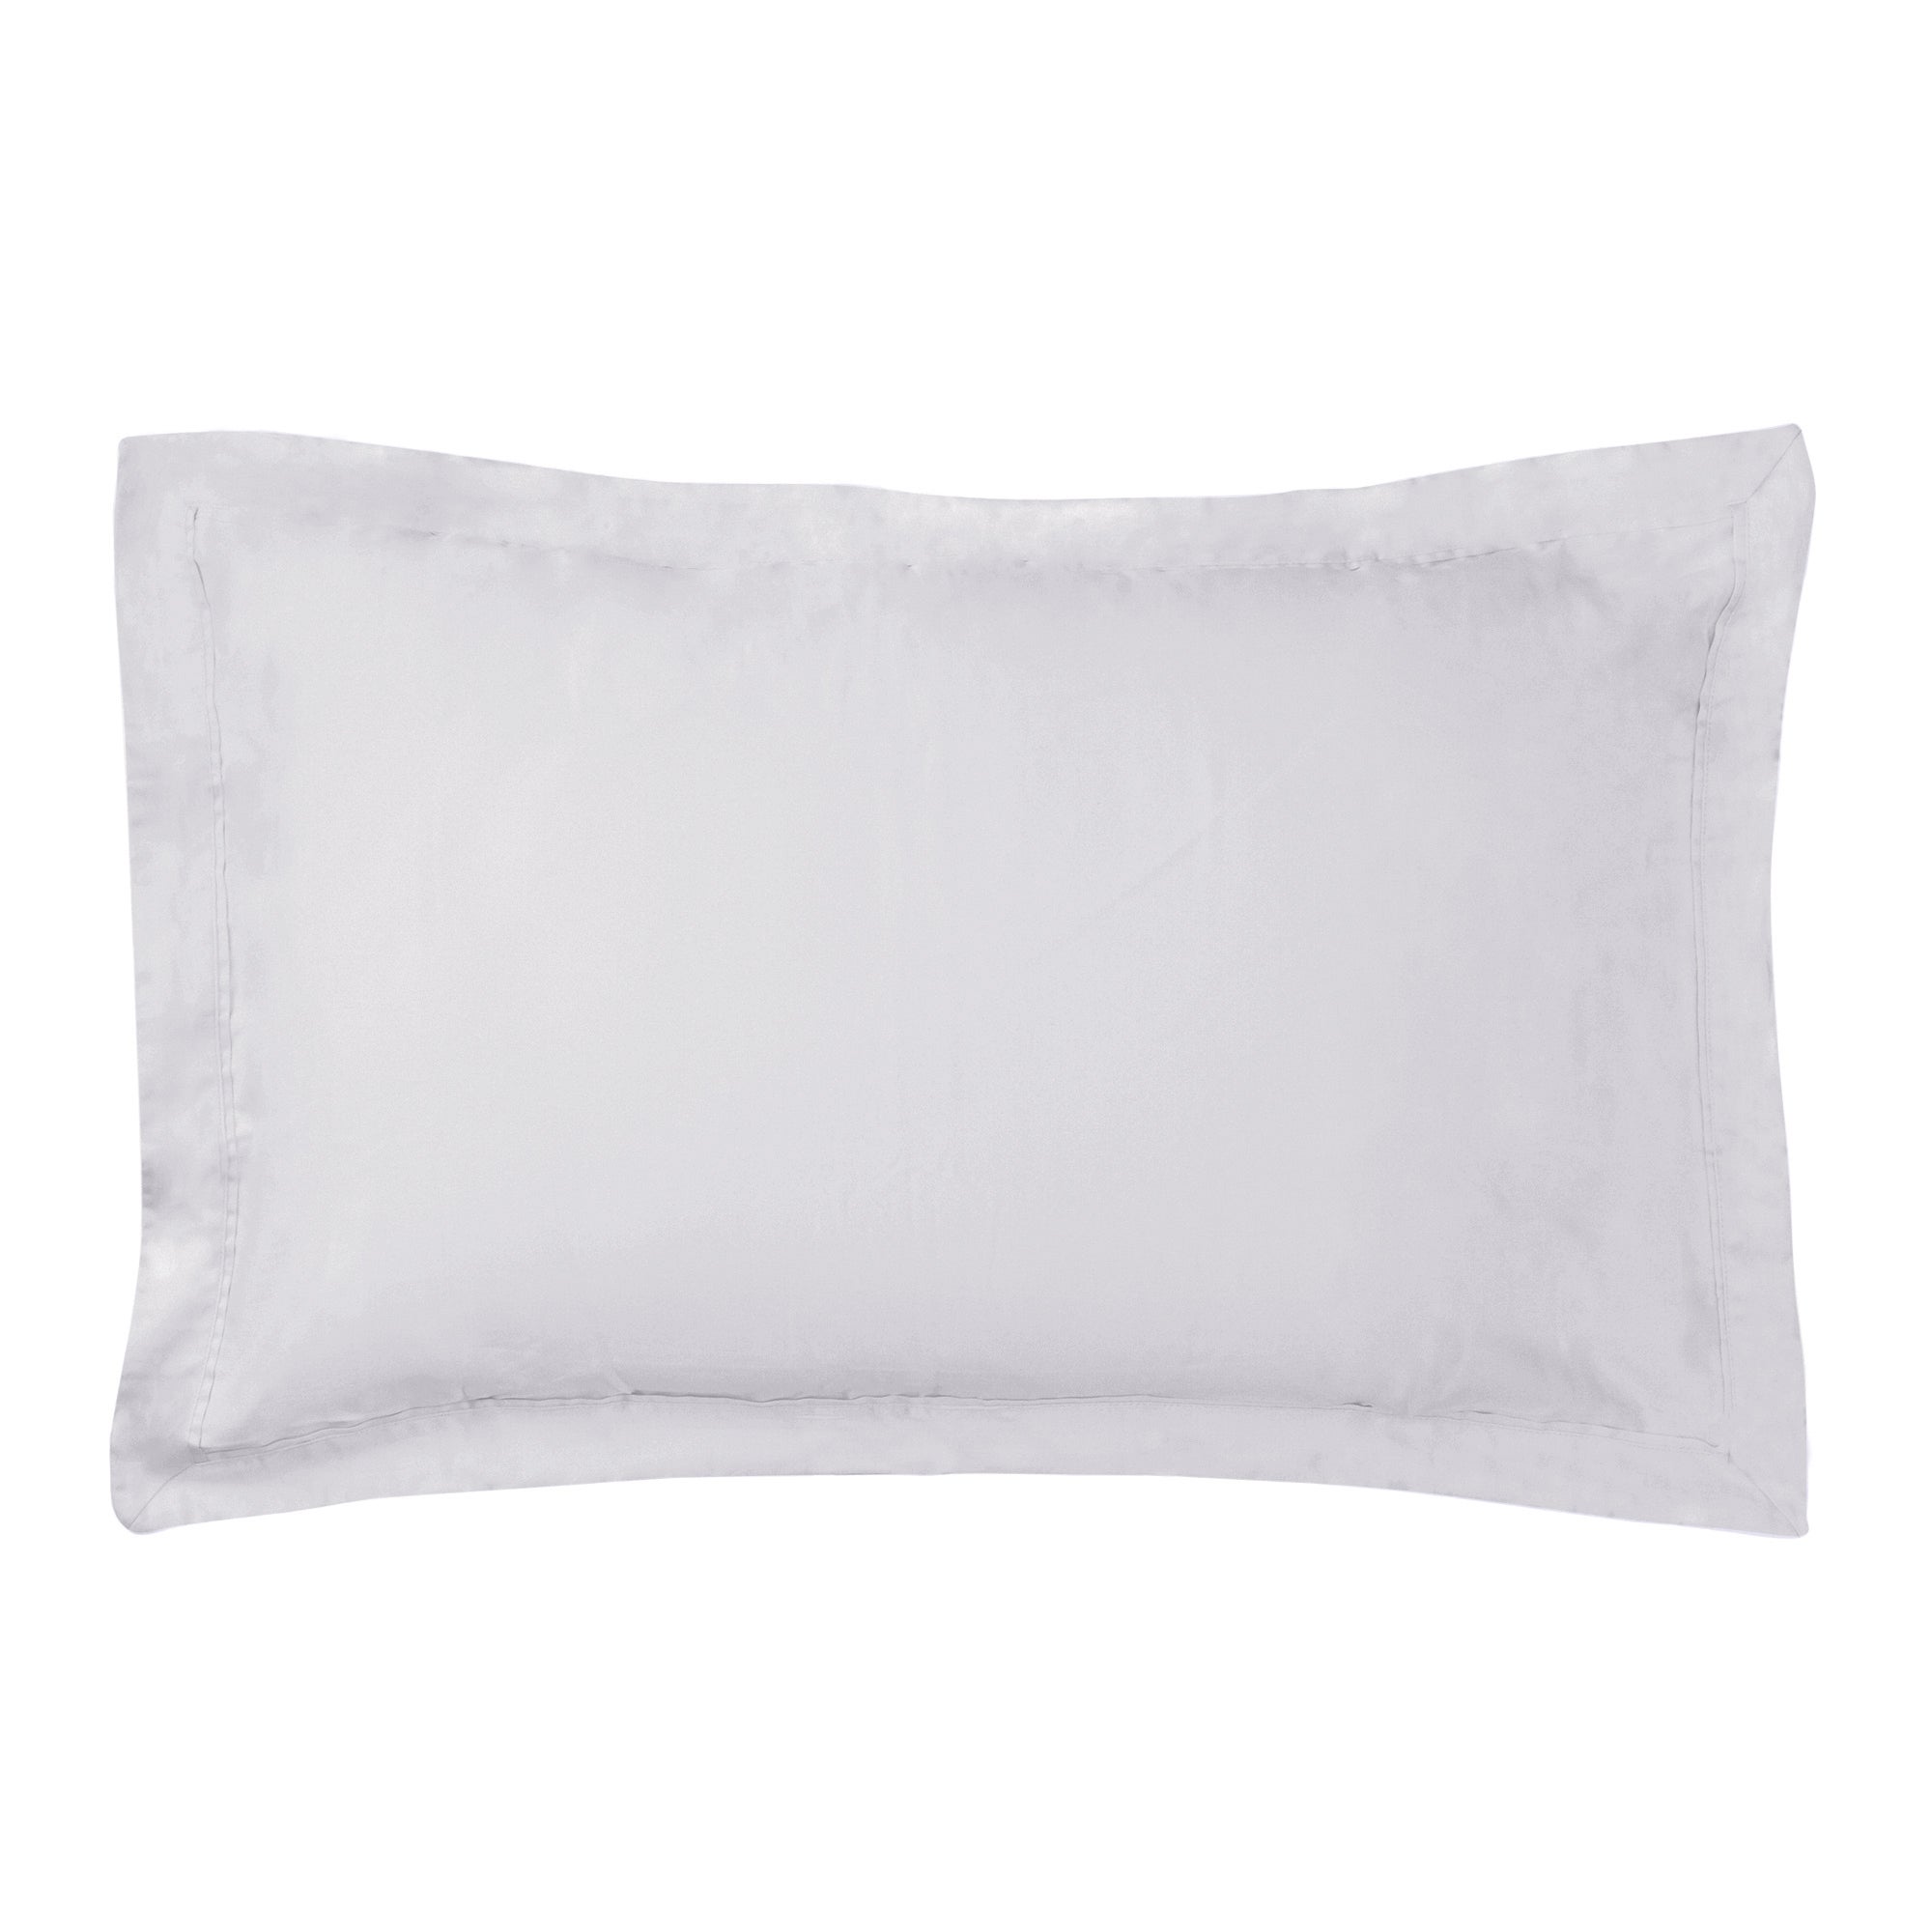 Dorma 500 Thread Count 100% Cotton Sateen Plain Oxford Pillowcase